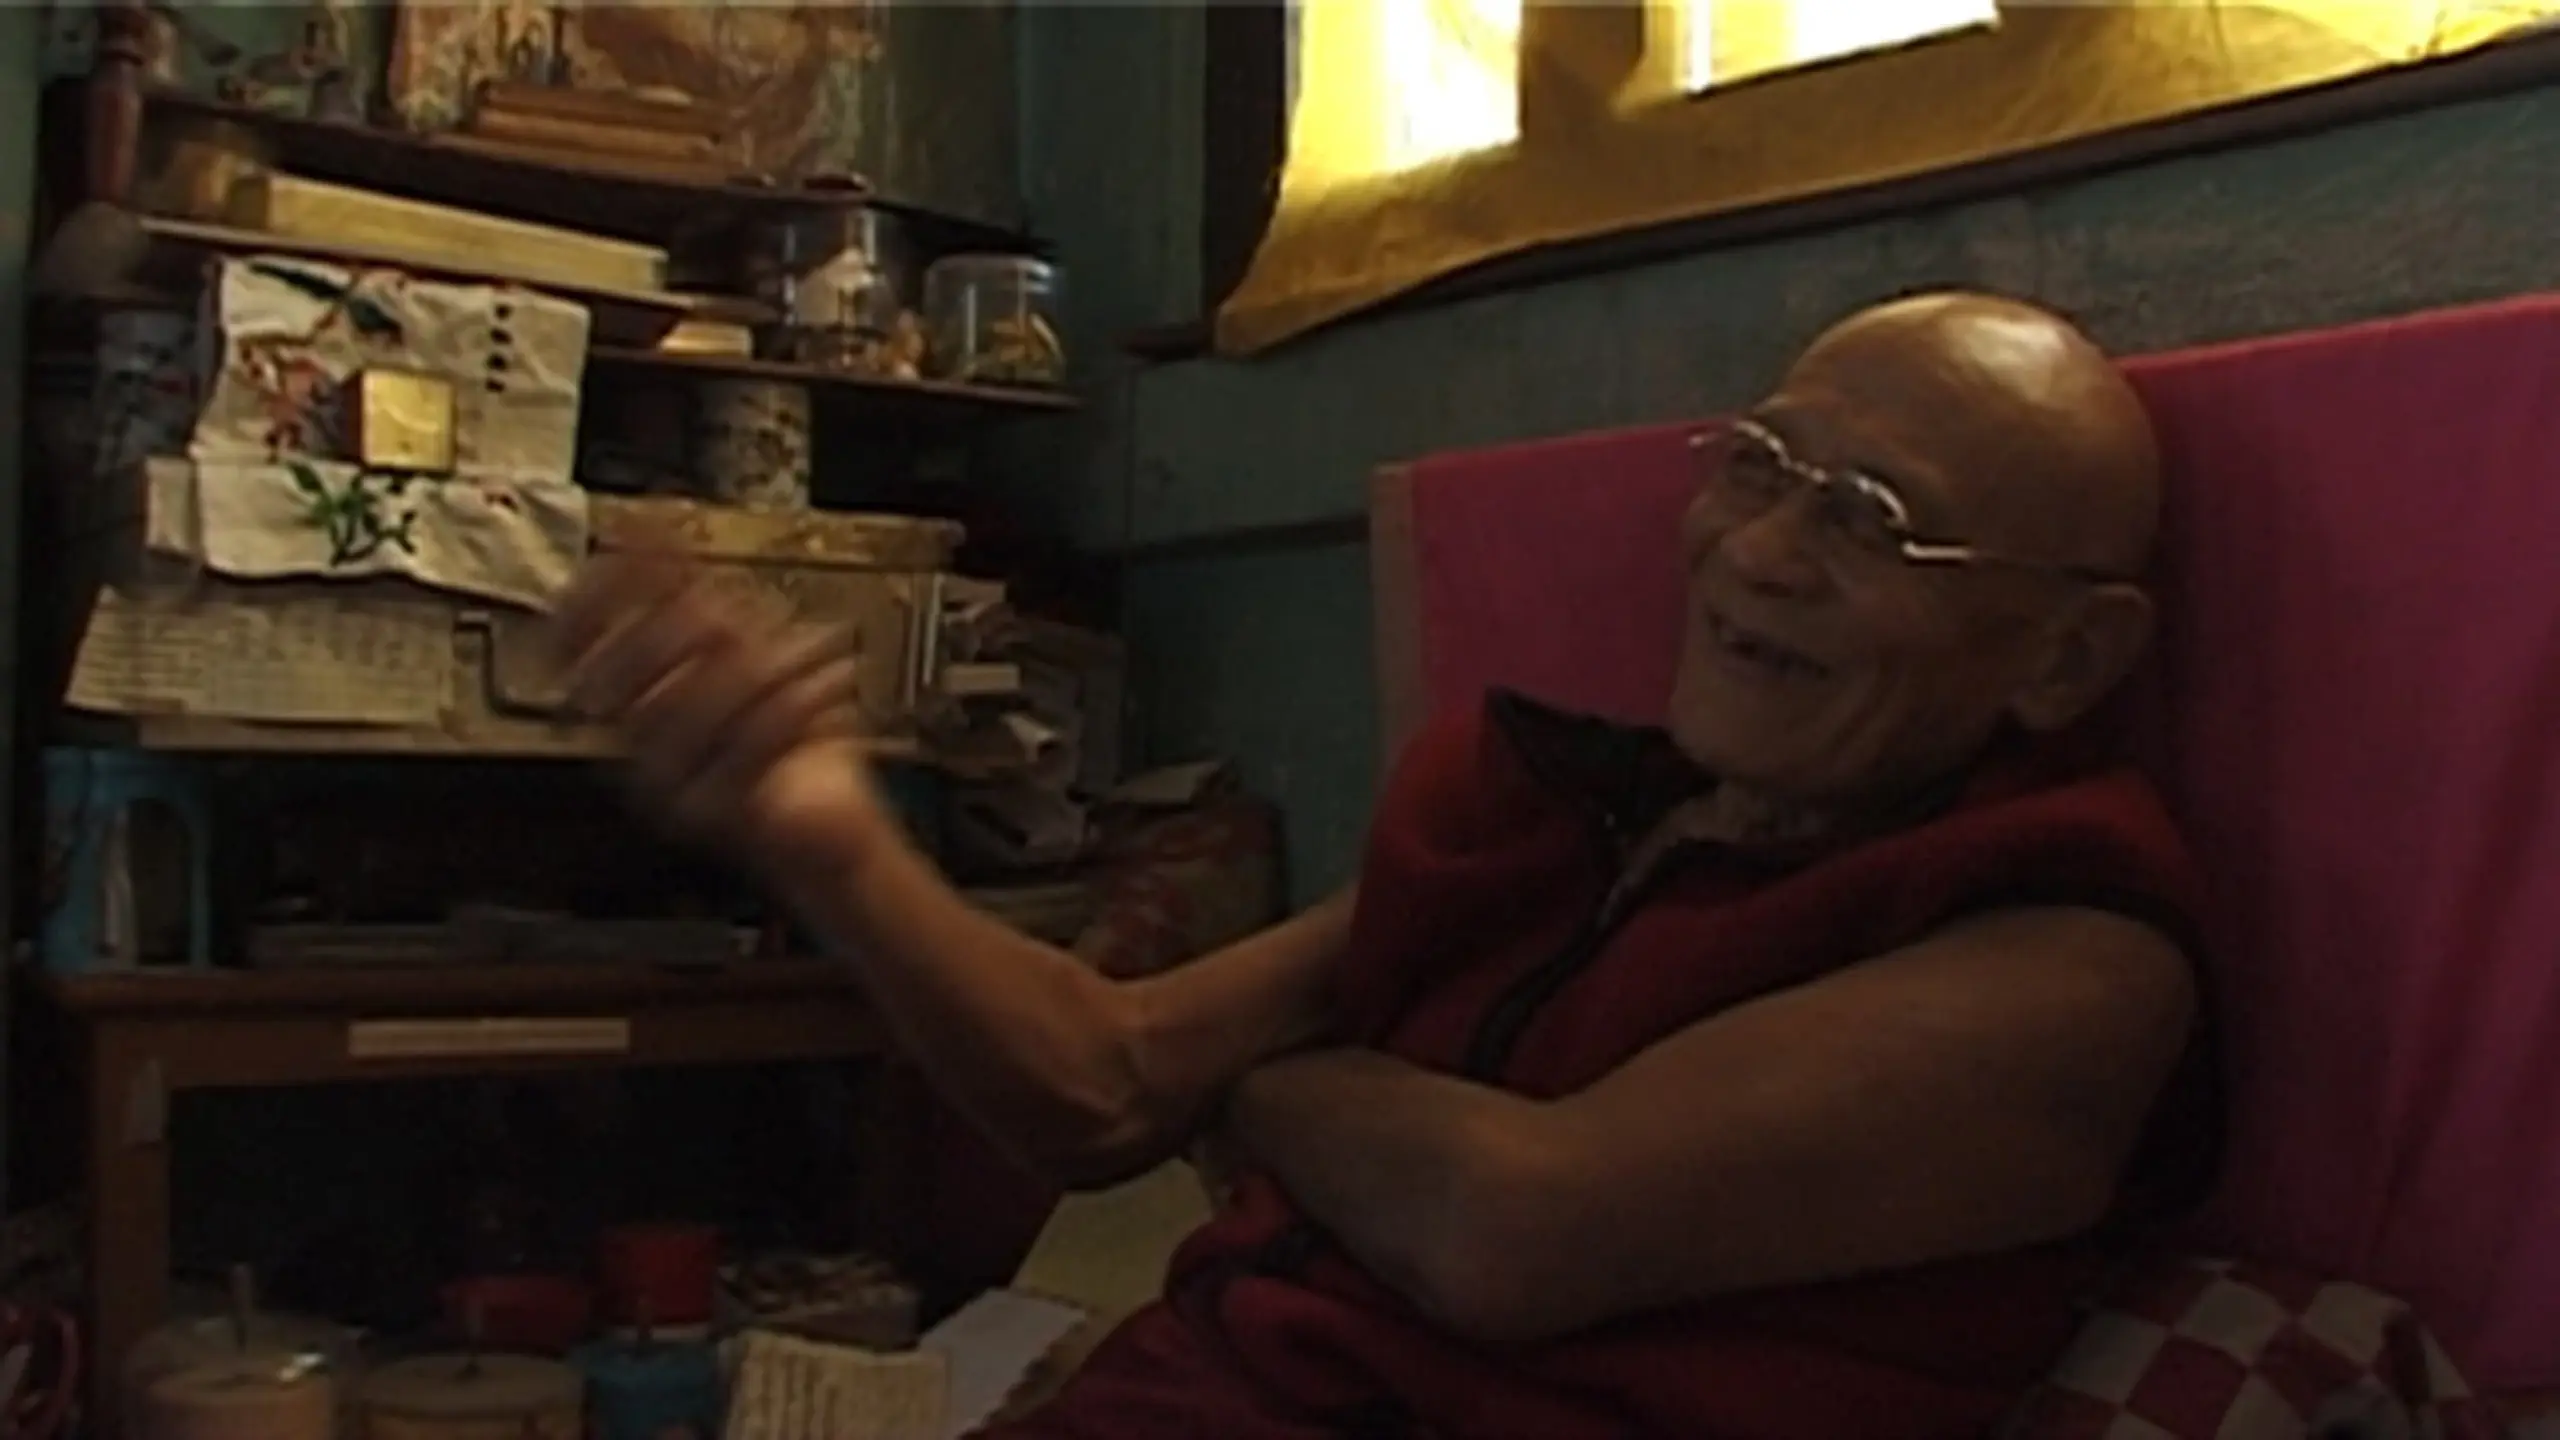 Angry Monk -- Reflections on Tibet